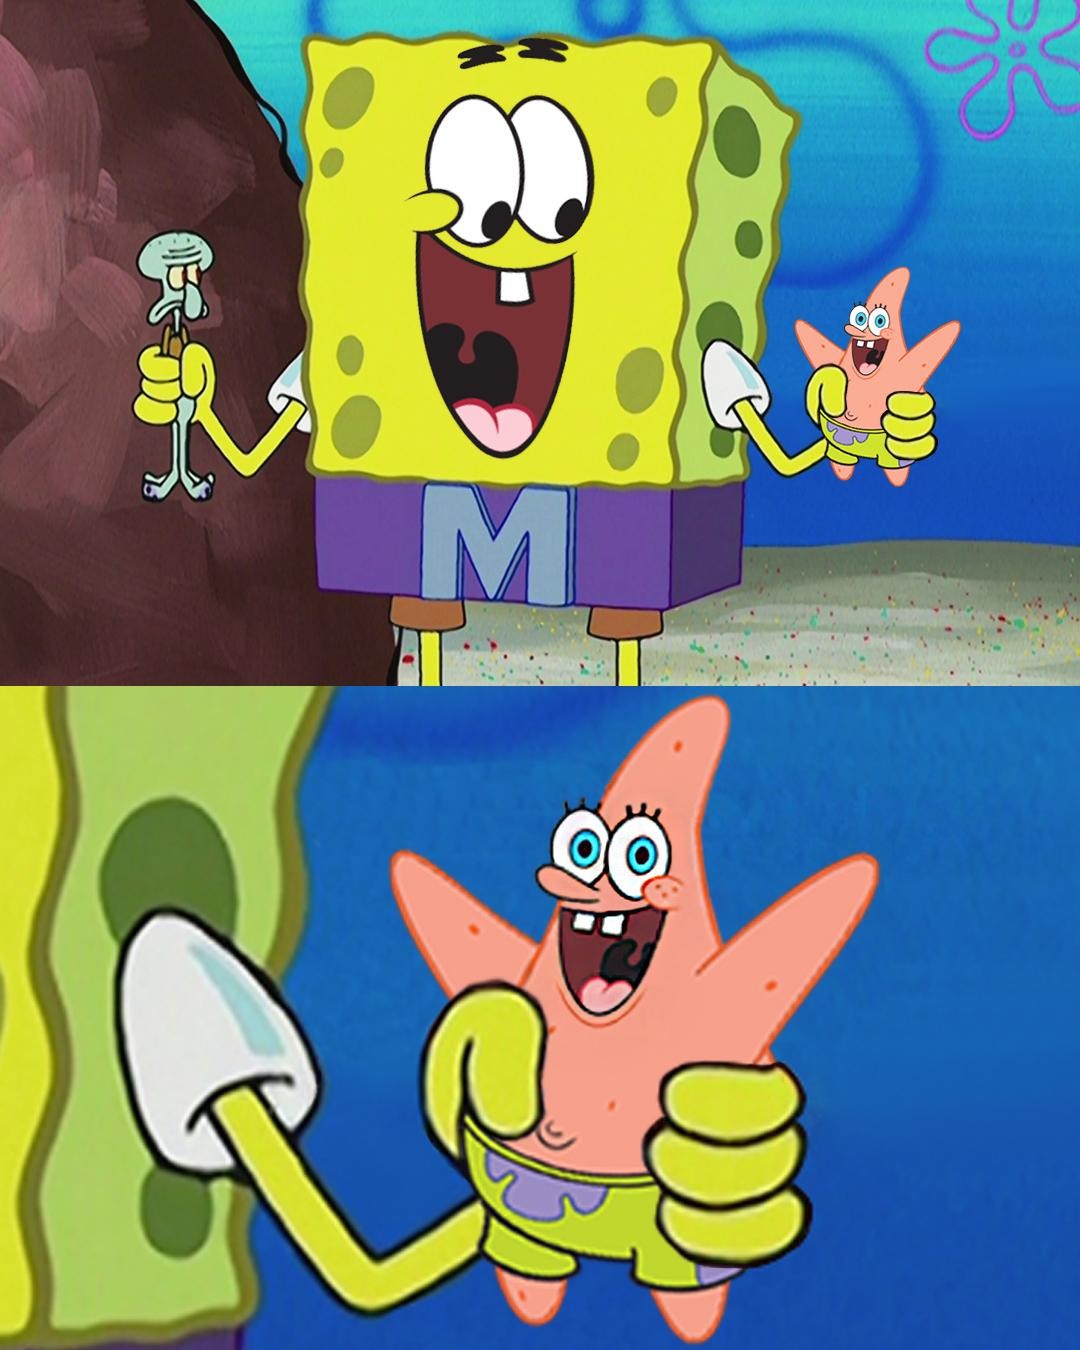 spongebob meme 2020- SpongeBob SquarePants - Bm M